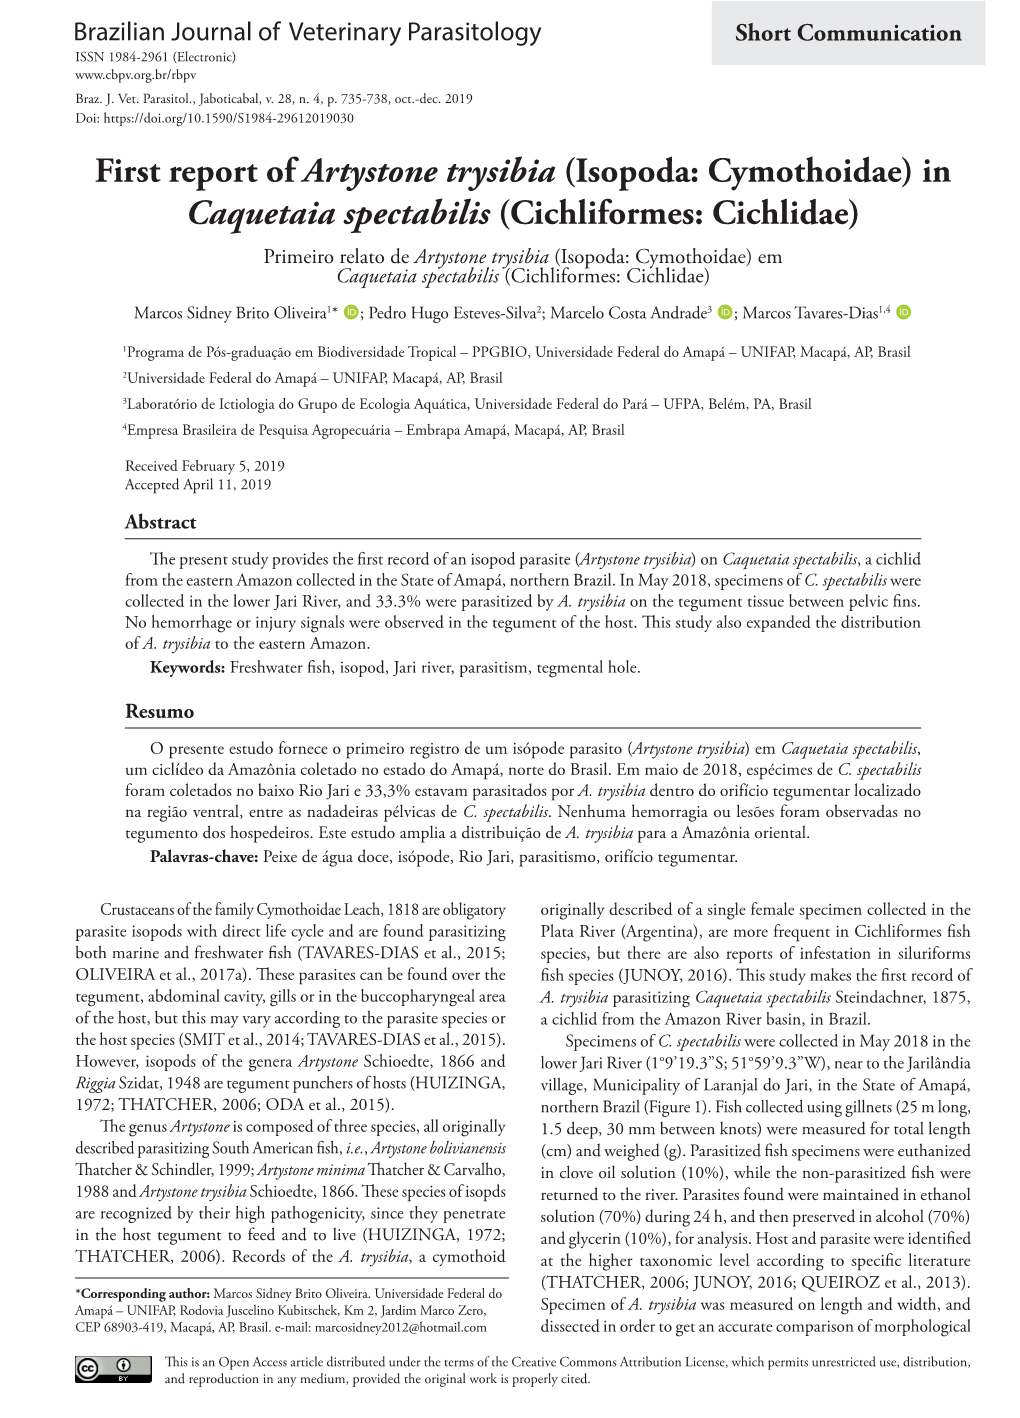 Isopoda: Cymothoidae) in Caquetaia Spectabilis (Cichliformes: Cichlidae